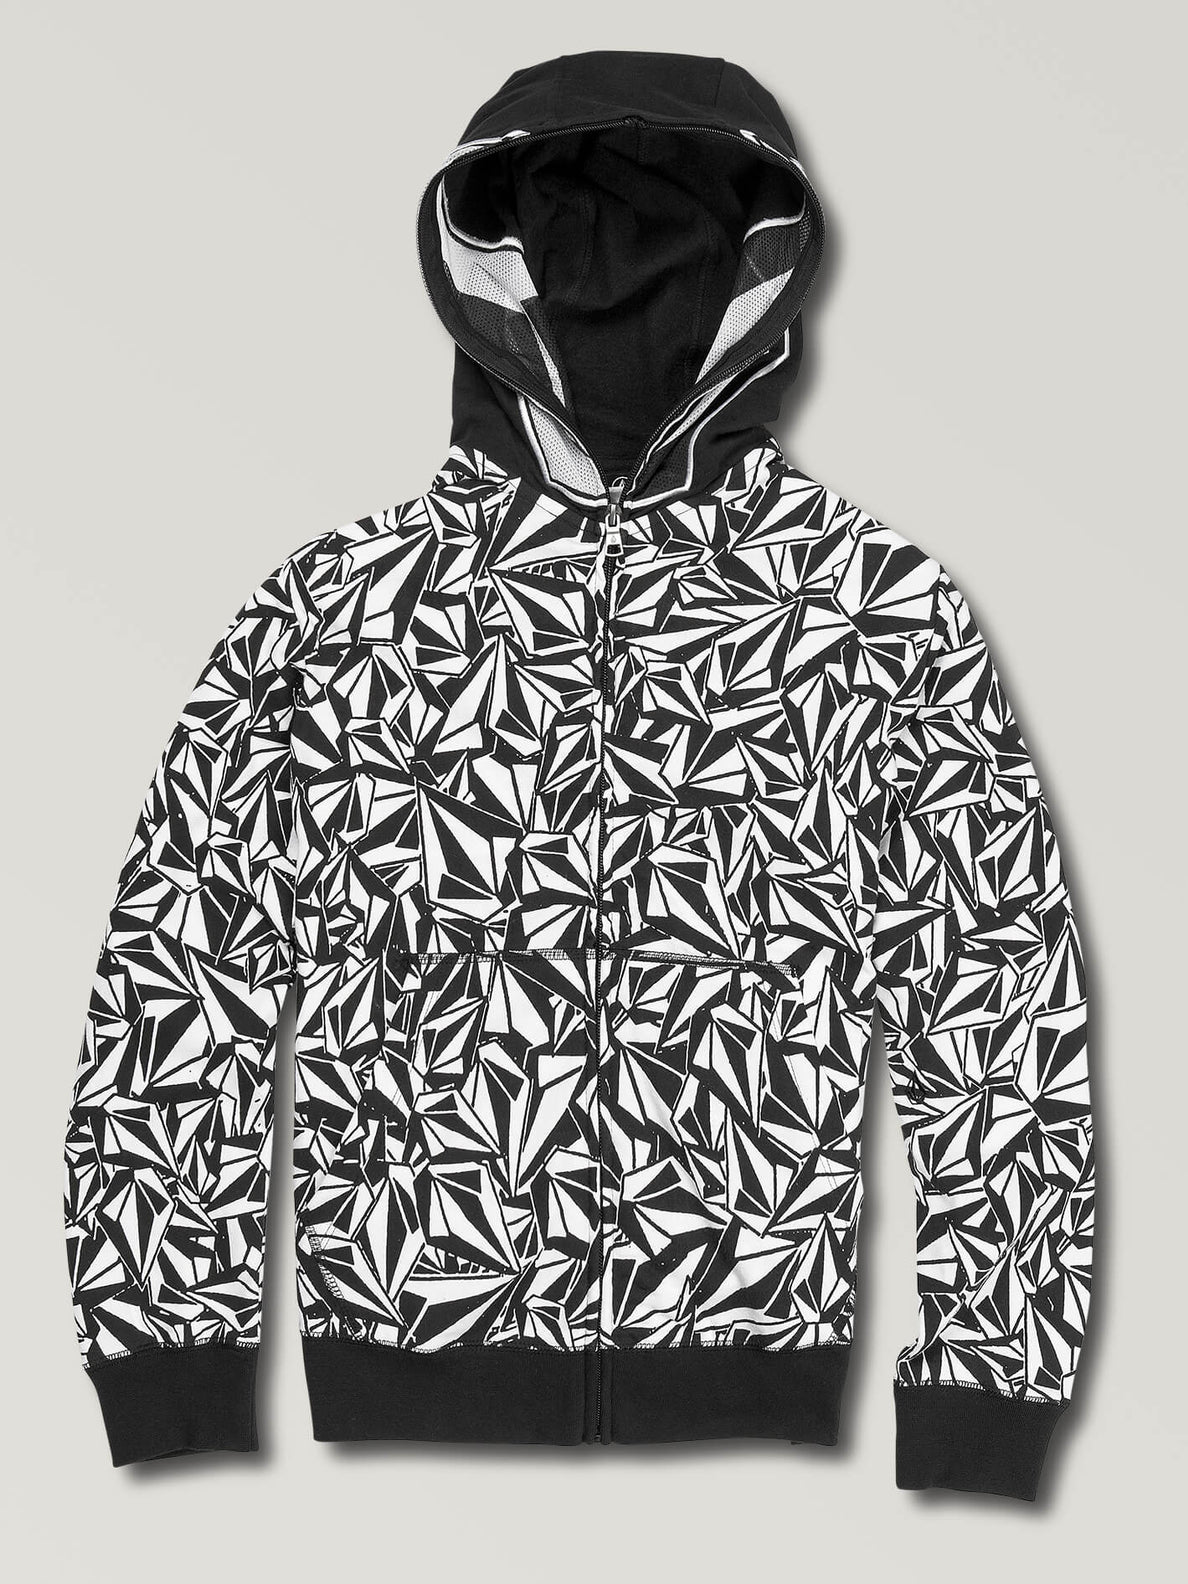 volcom full zip hoodies with faces